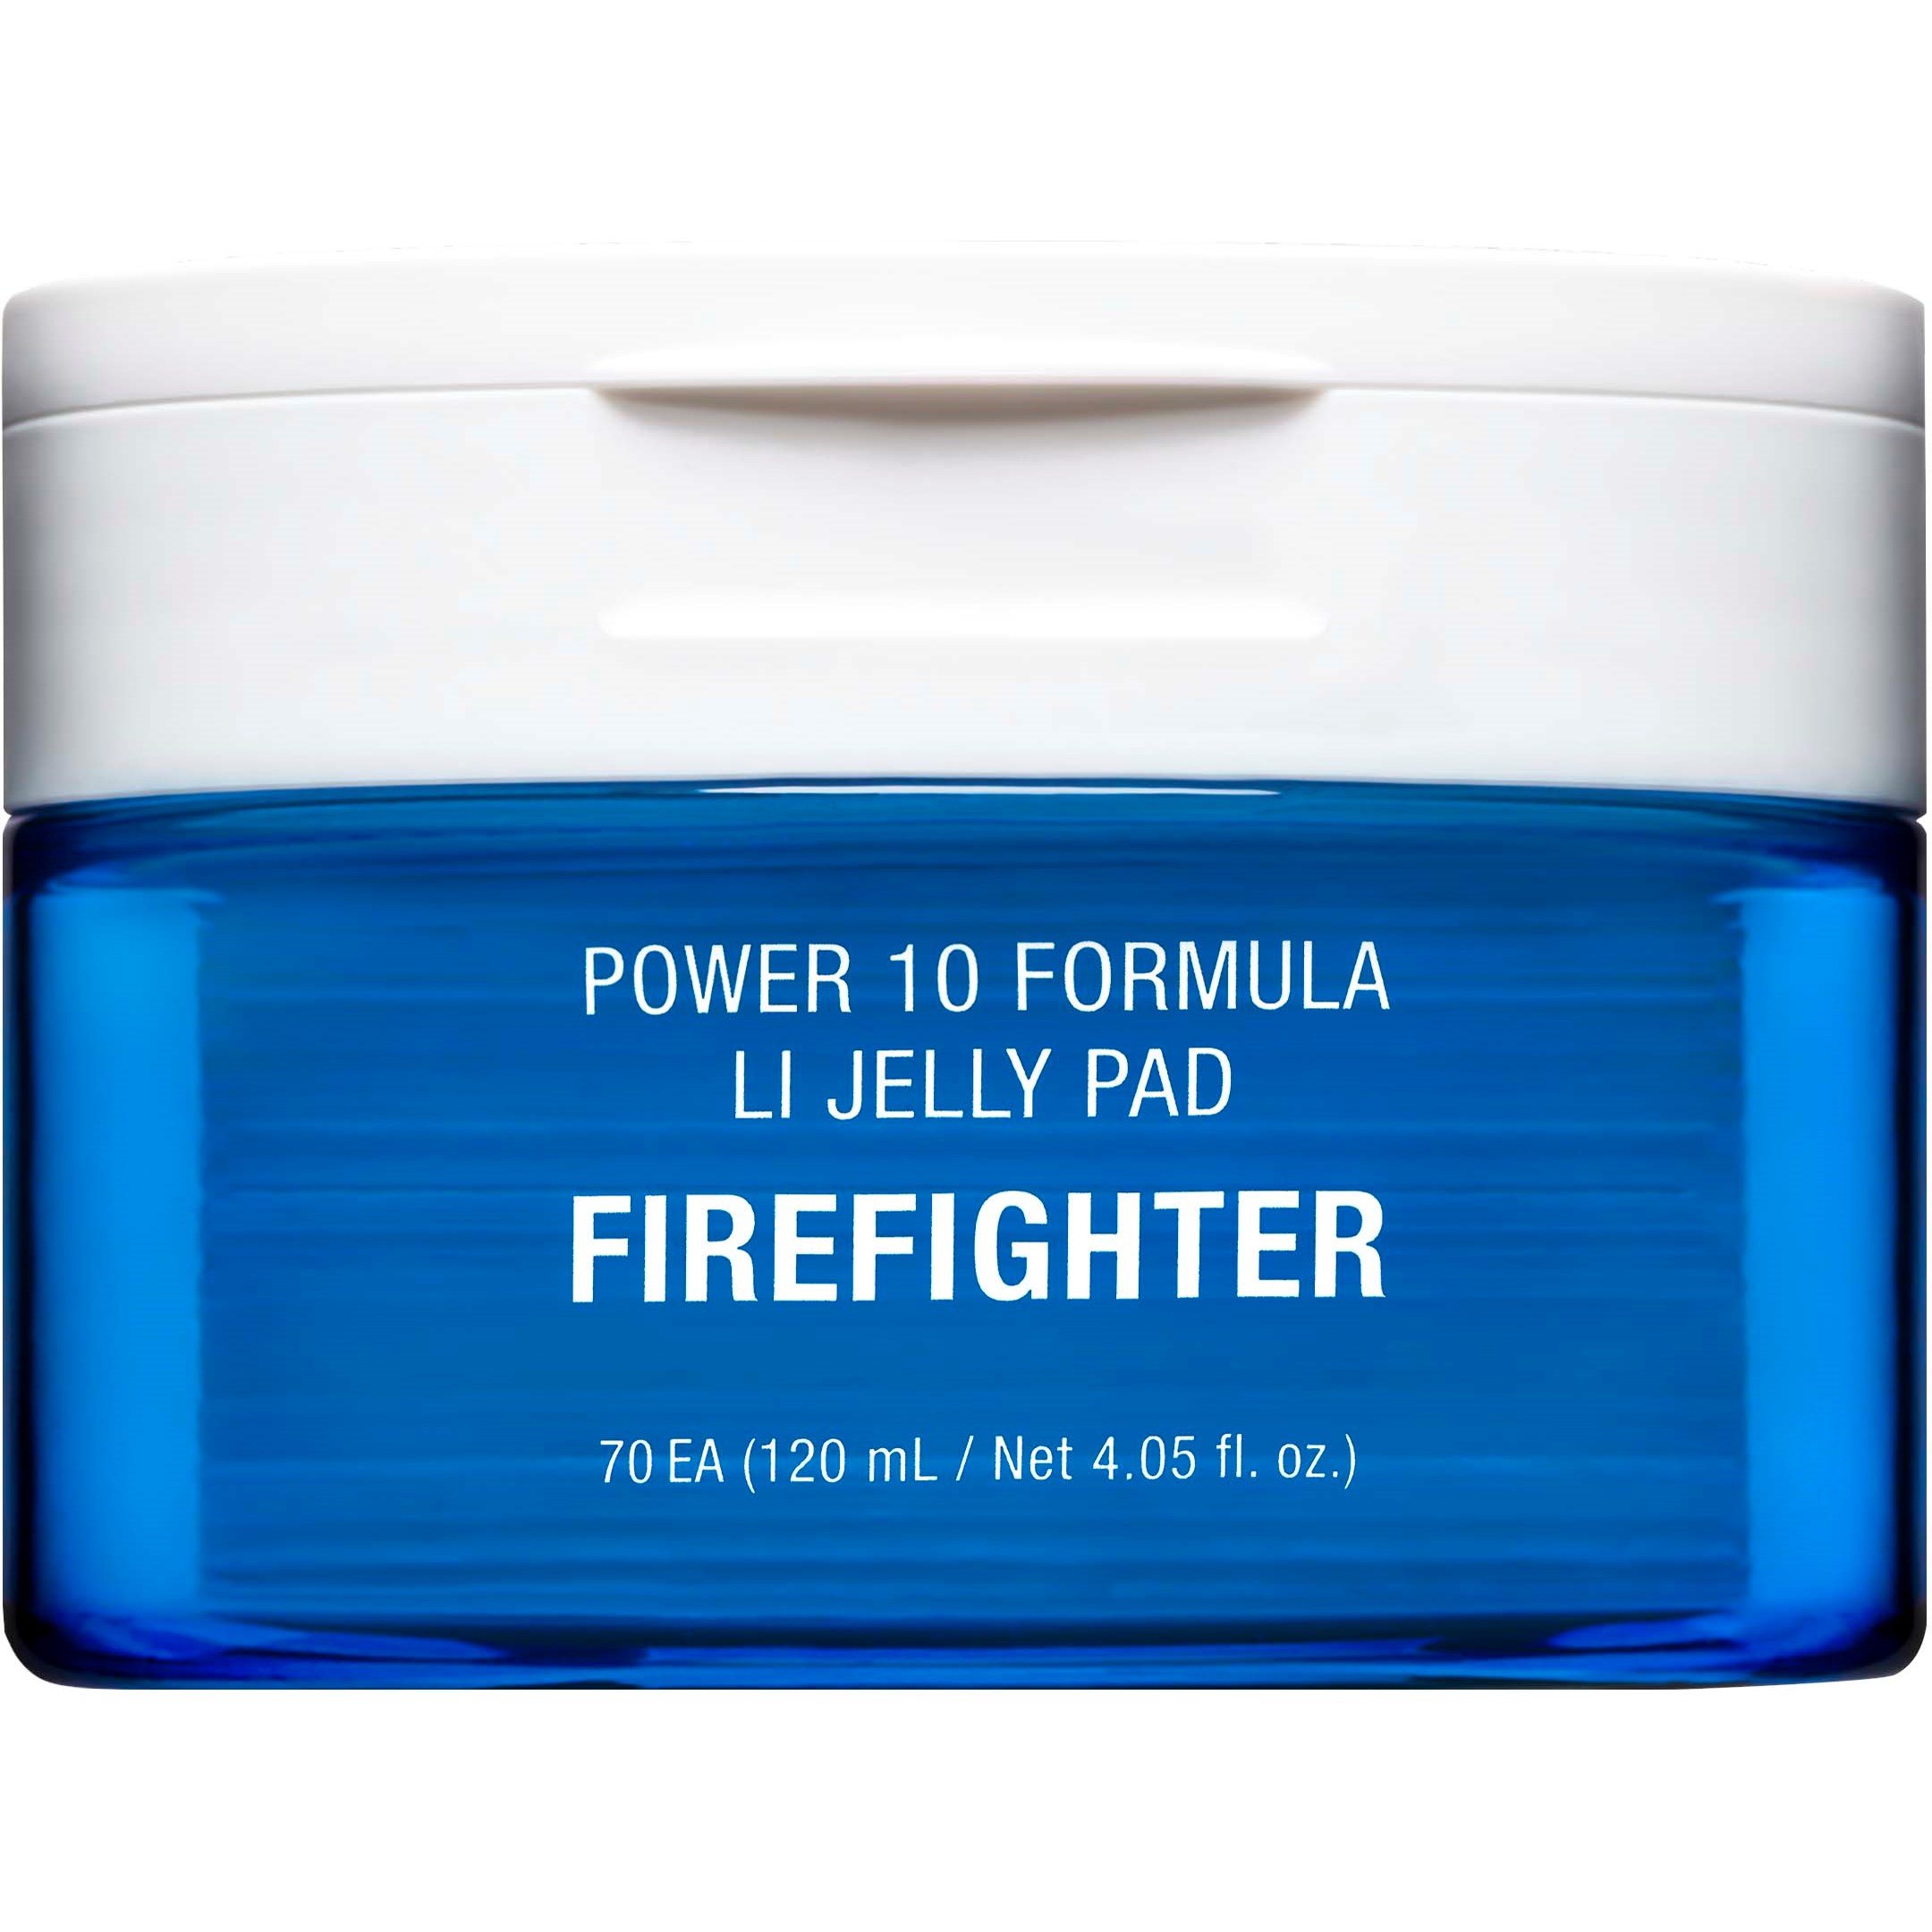 Läs mer om ItS SKIN Power 10 Formula Li Jelly Pad Firefighter 120 ml